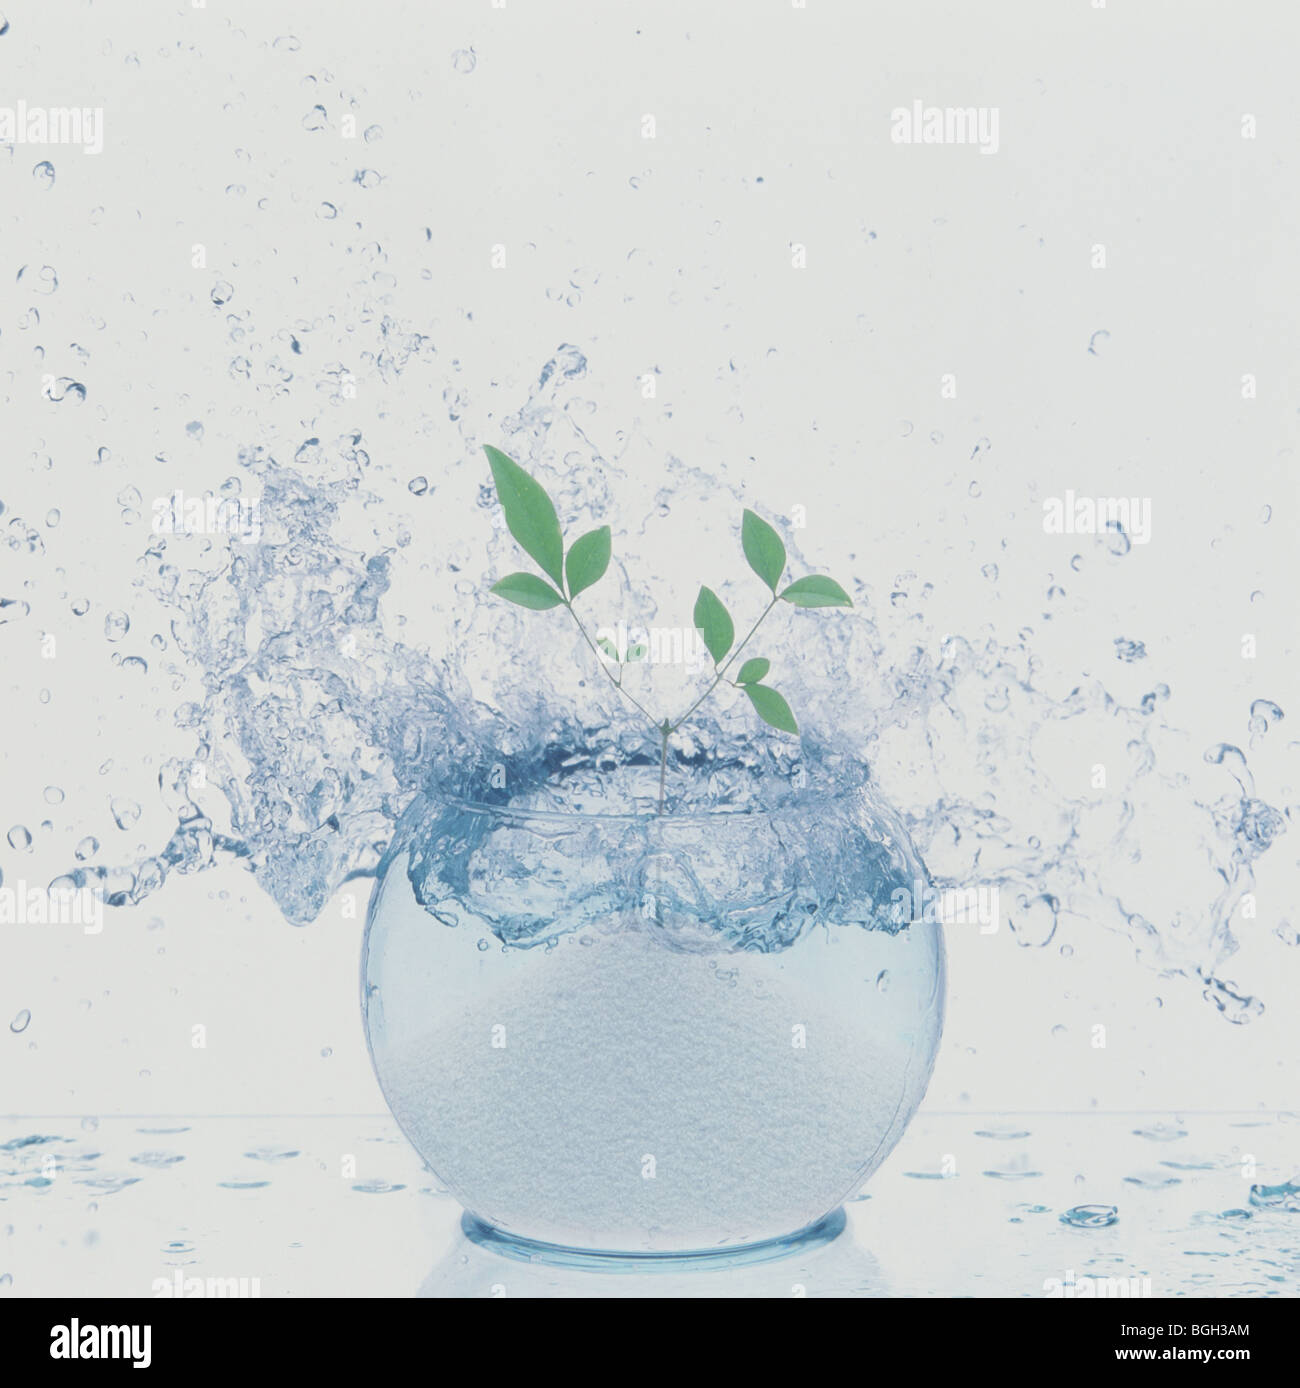 Schizzi di acqua in una vaschetta contenente piante Foto Stock